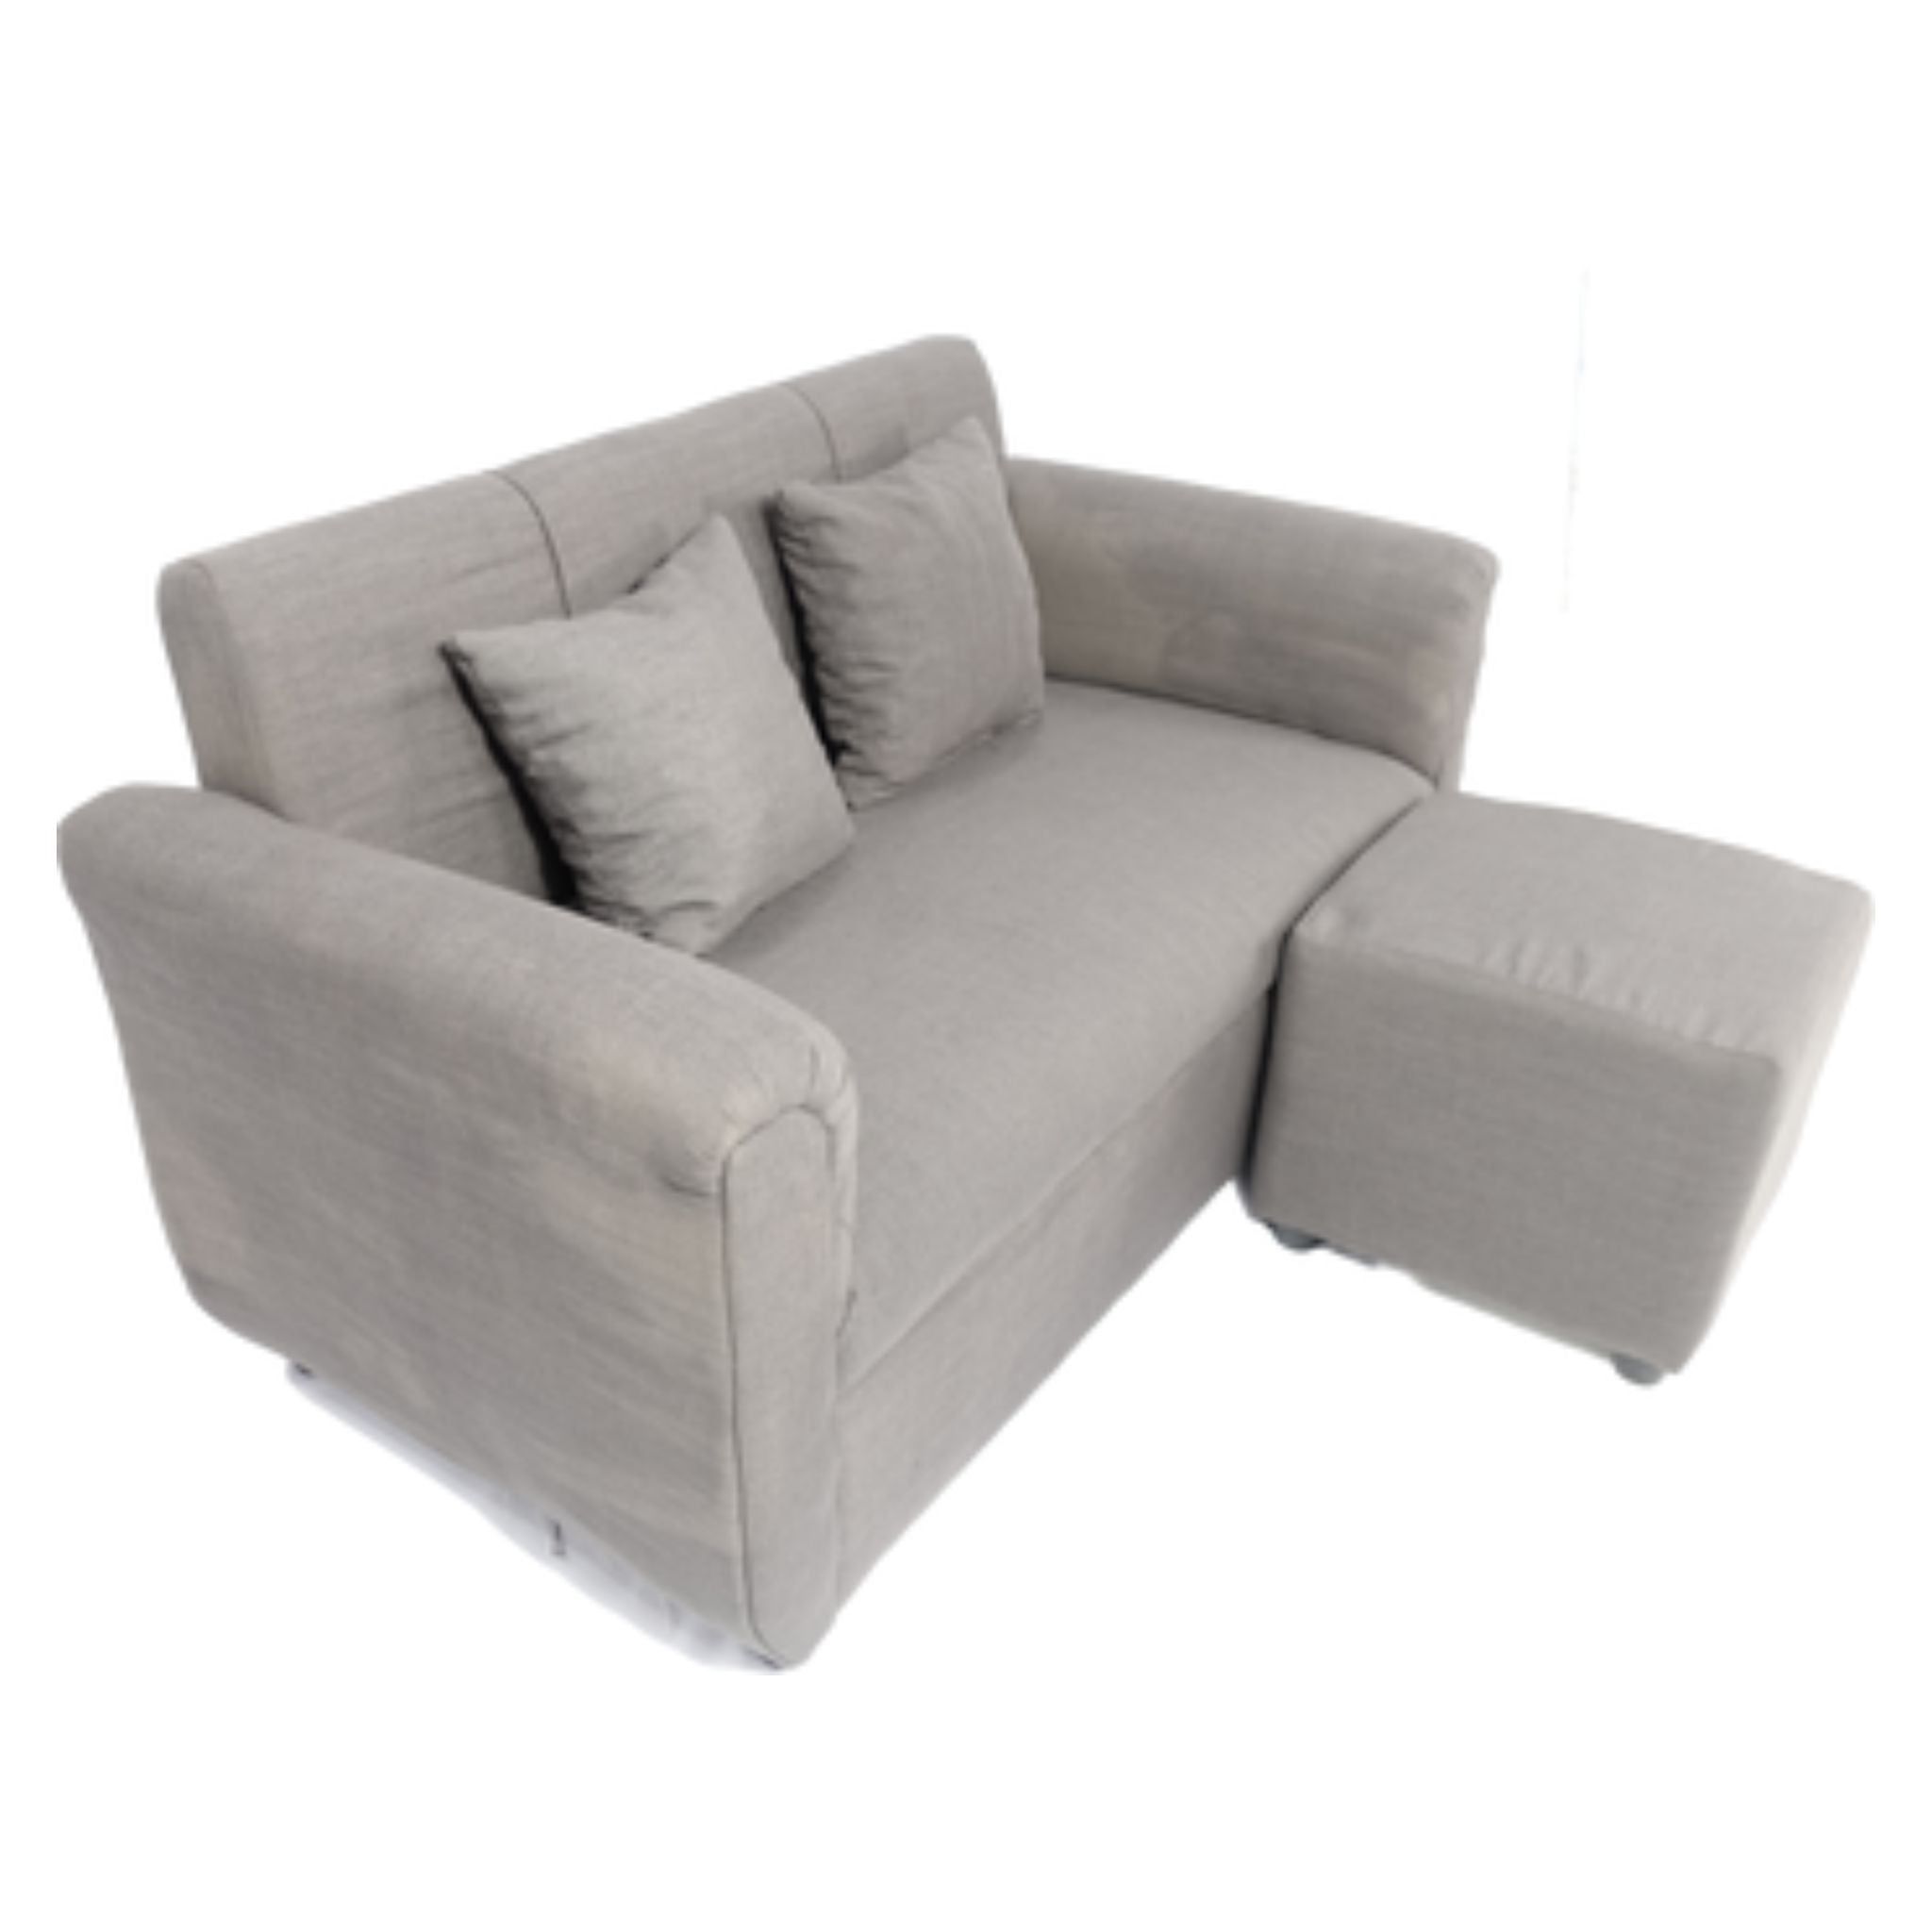 SHEENA 2-Seater Fabric Sofa w/ Ottoman AF Home